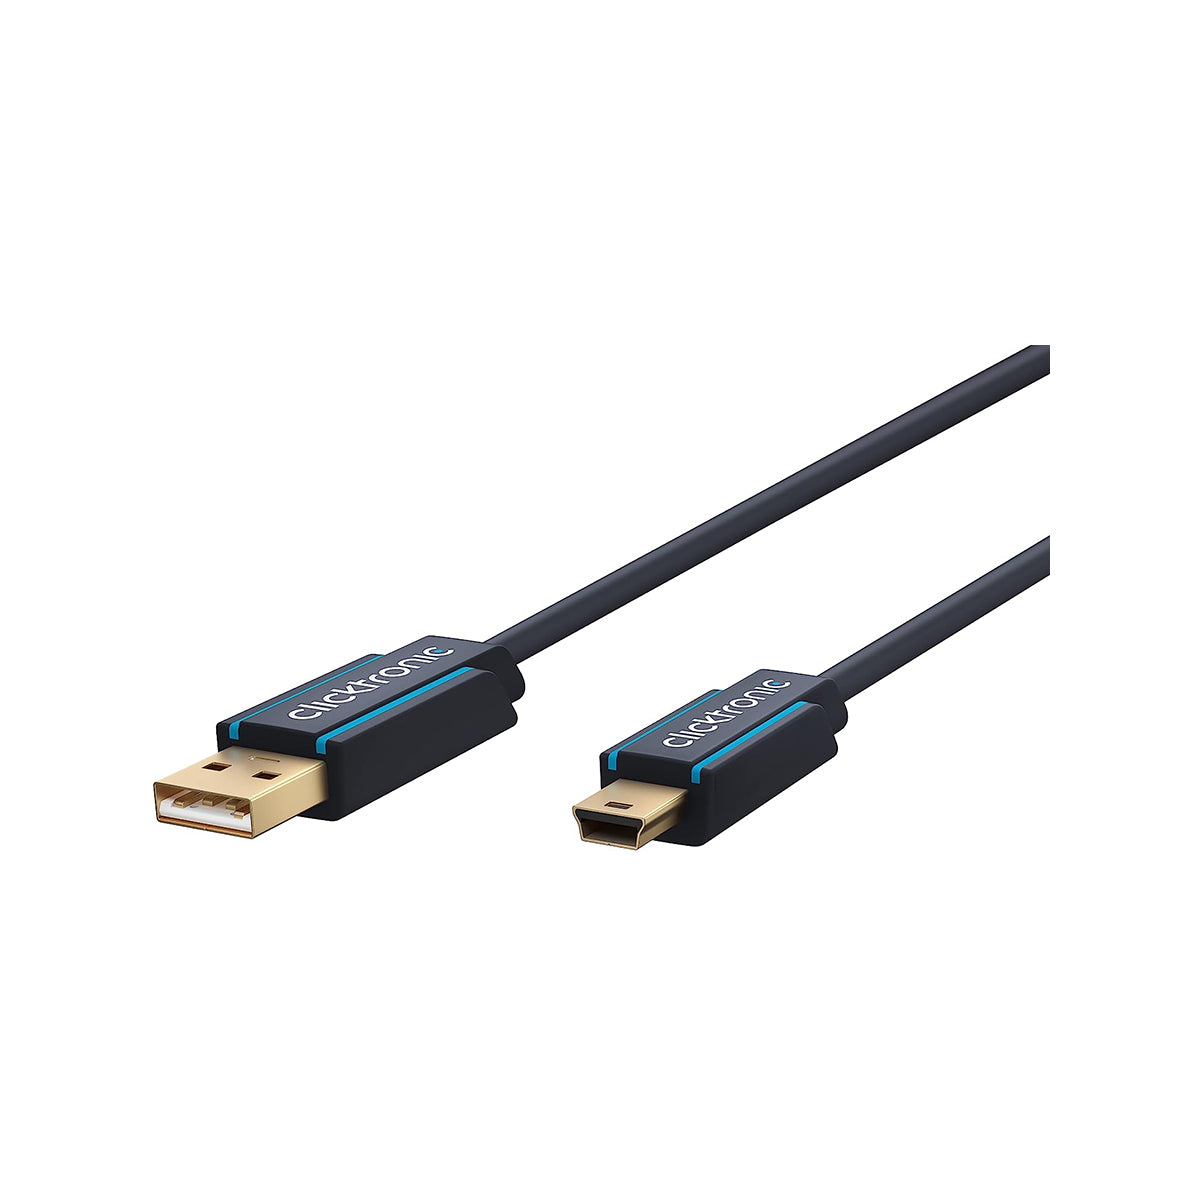 Clicktronic USB A 2.0 to USB MINI-B 5 Cable - 1.8m